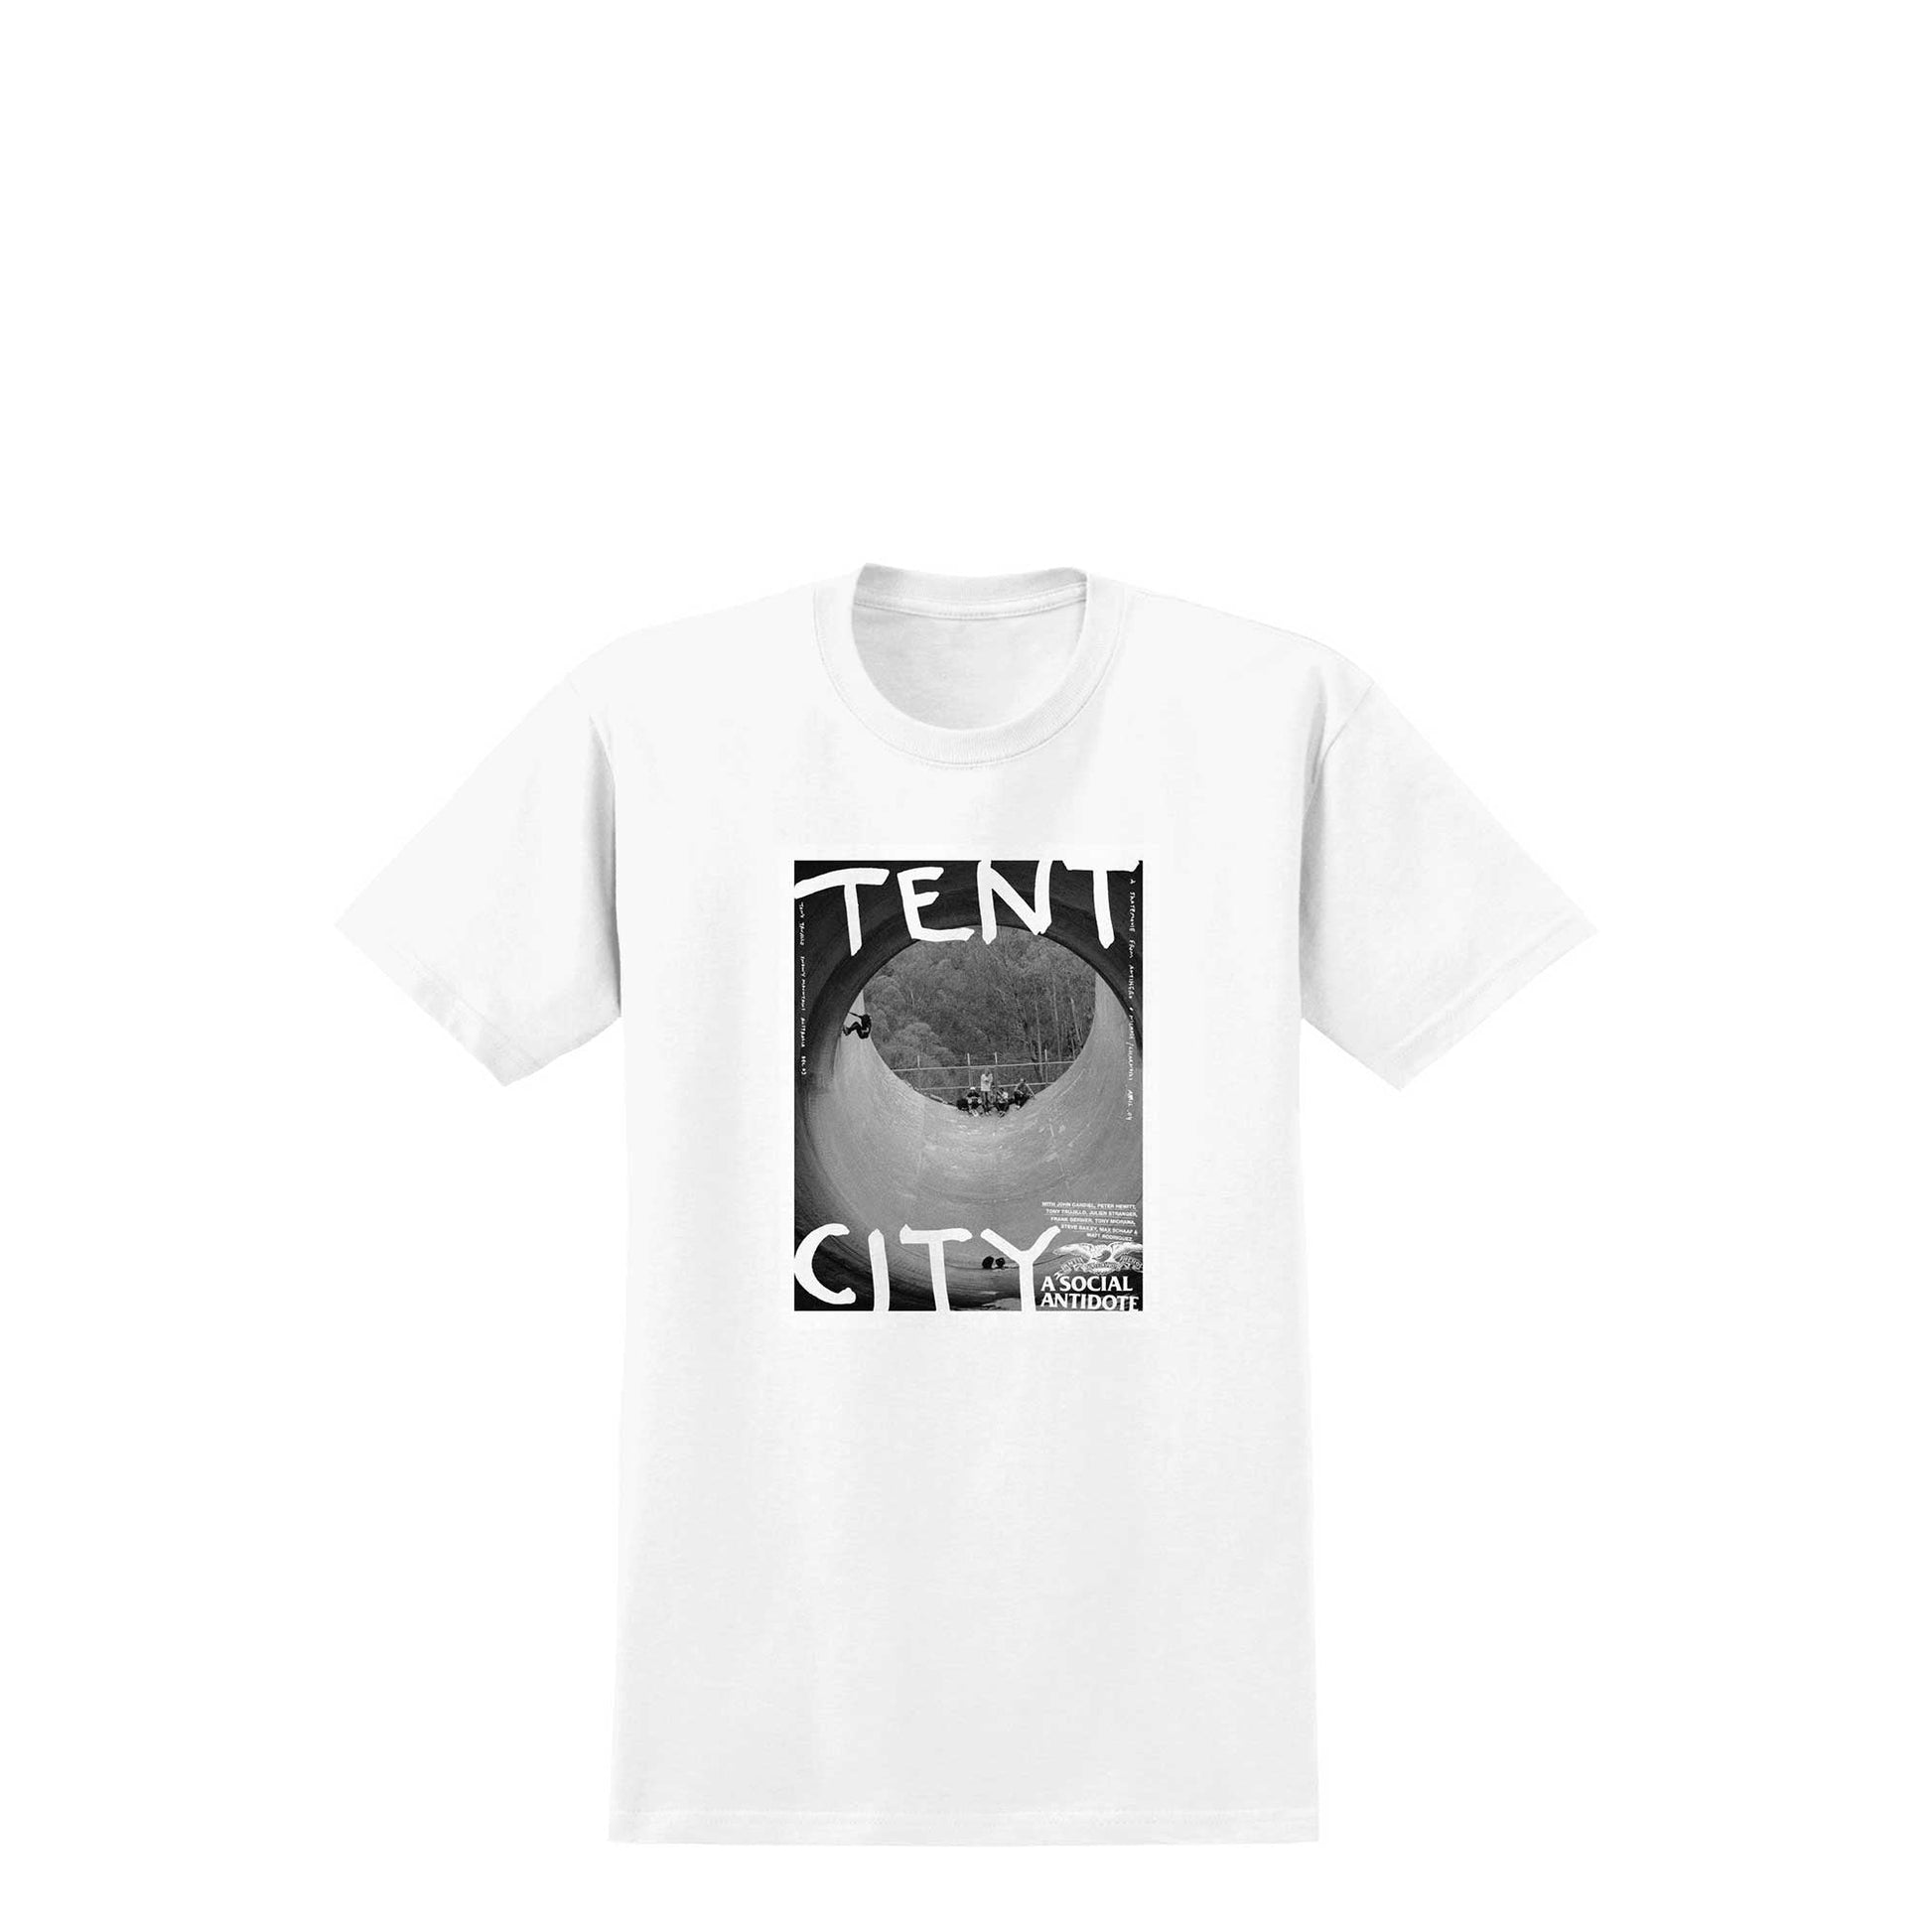 Antihero Tent City T-Shirt, white w/ photo print - Tiki Room Skateboards - 1